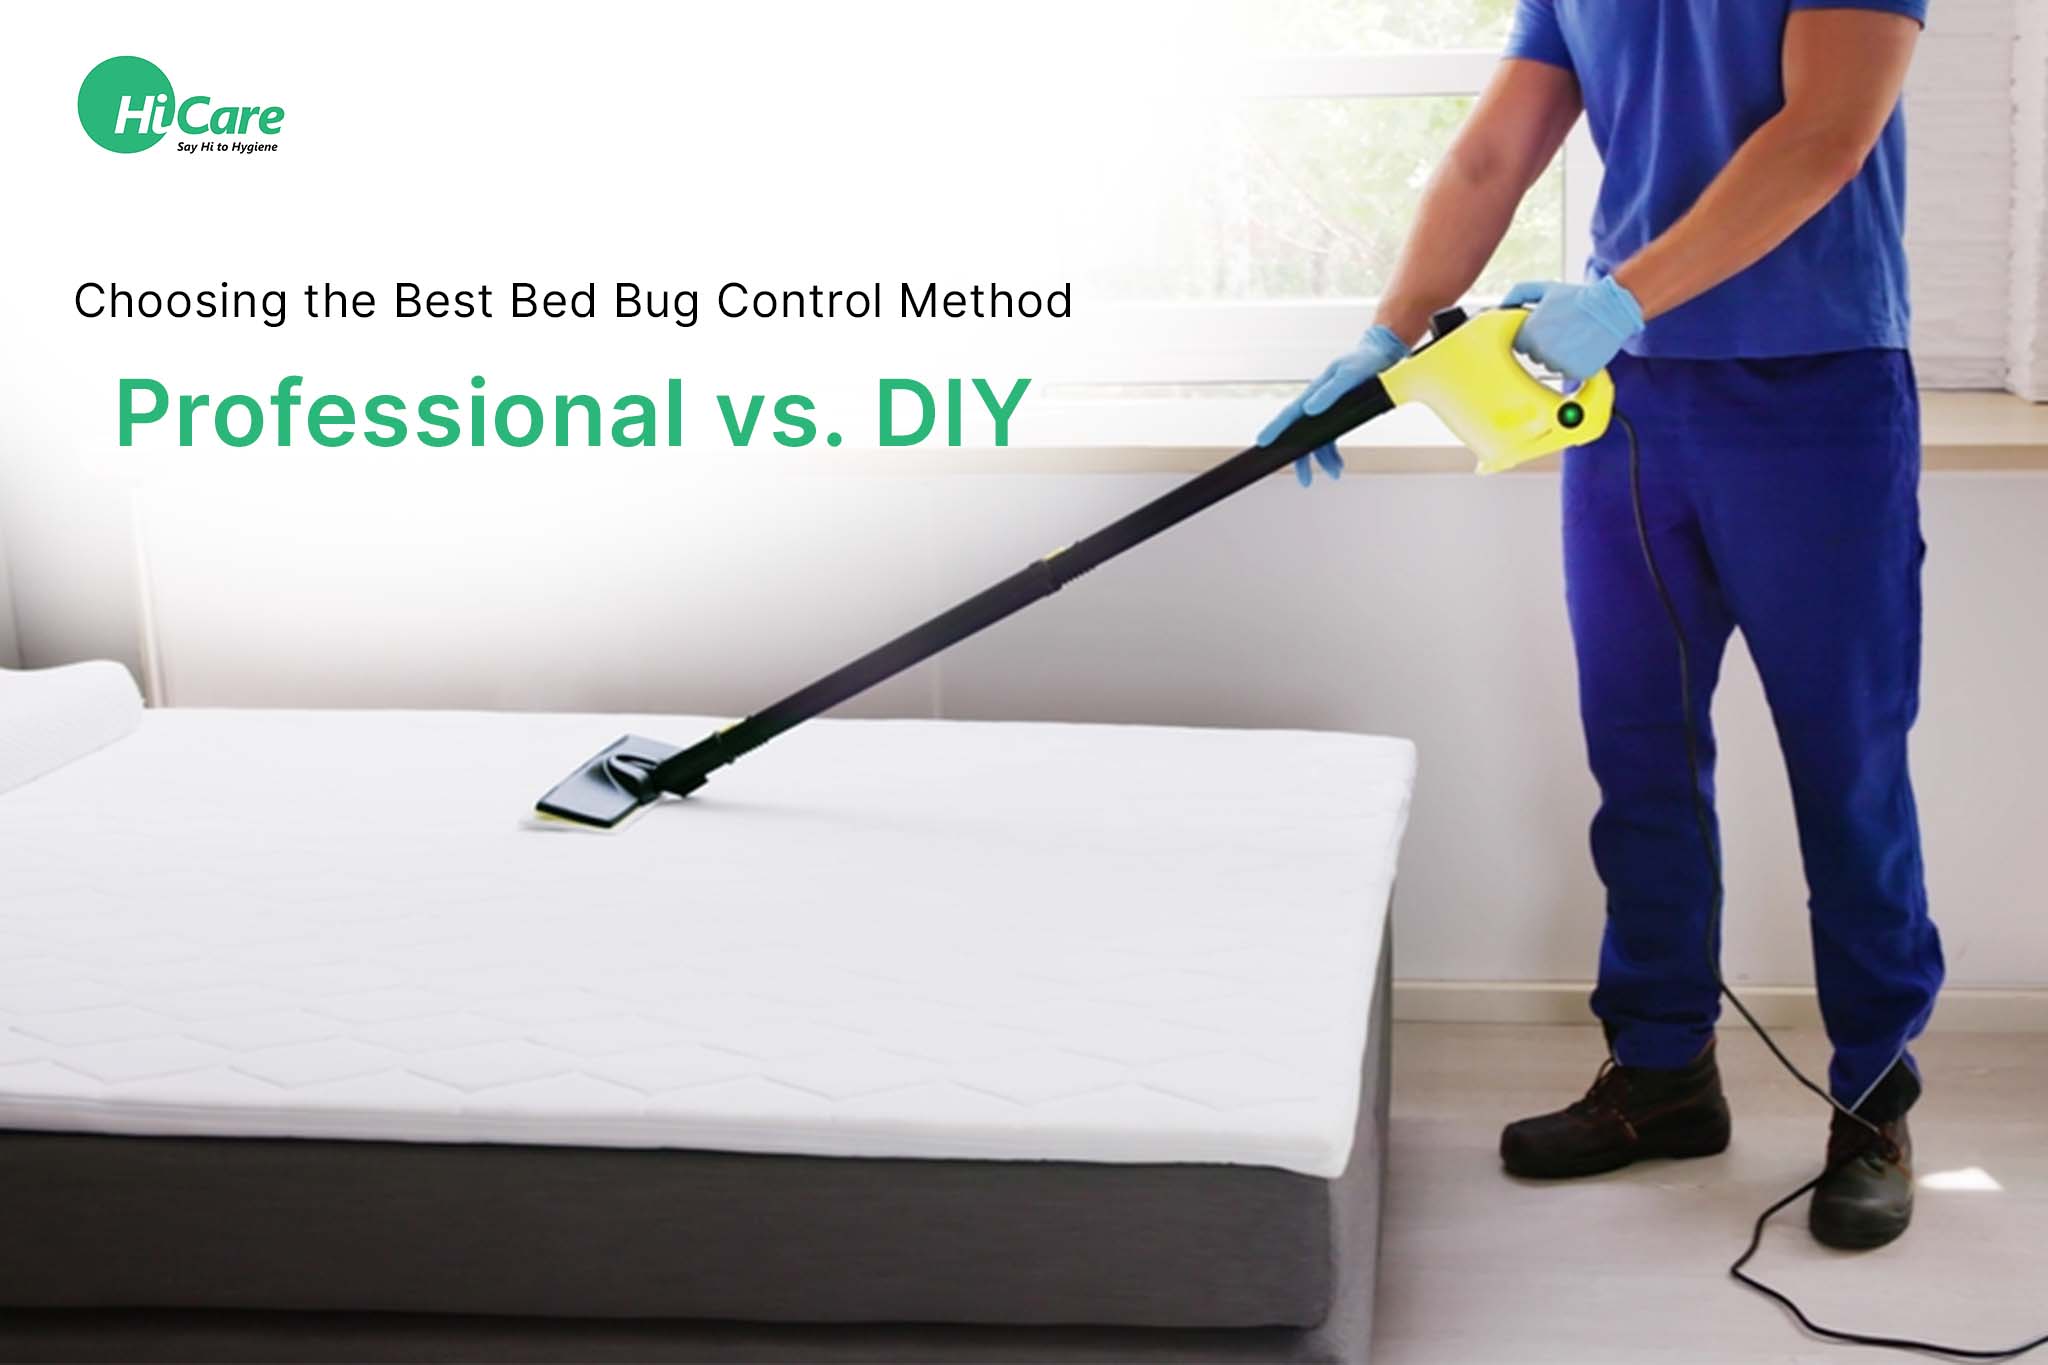 Professional vs. DIY: Choosing the Best Bed Bug Control Method